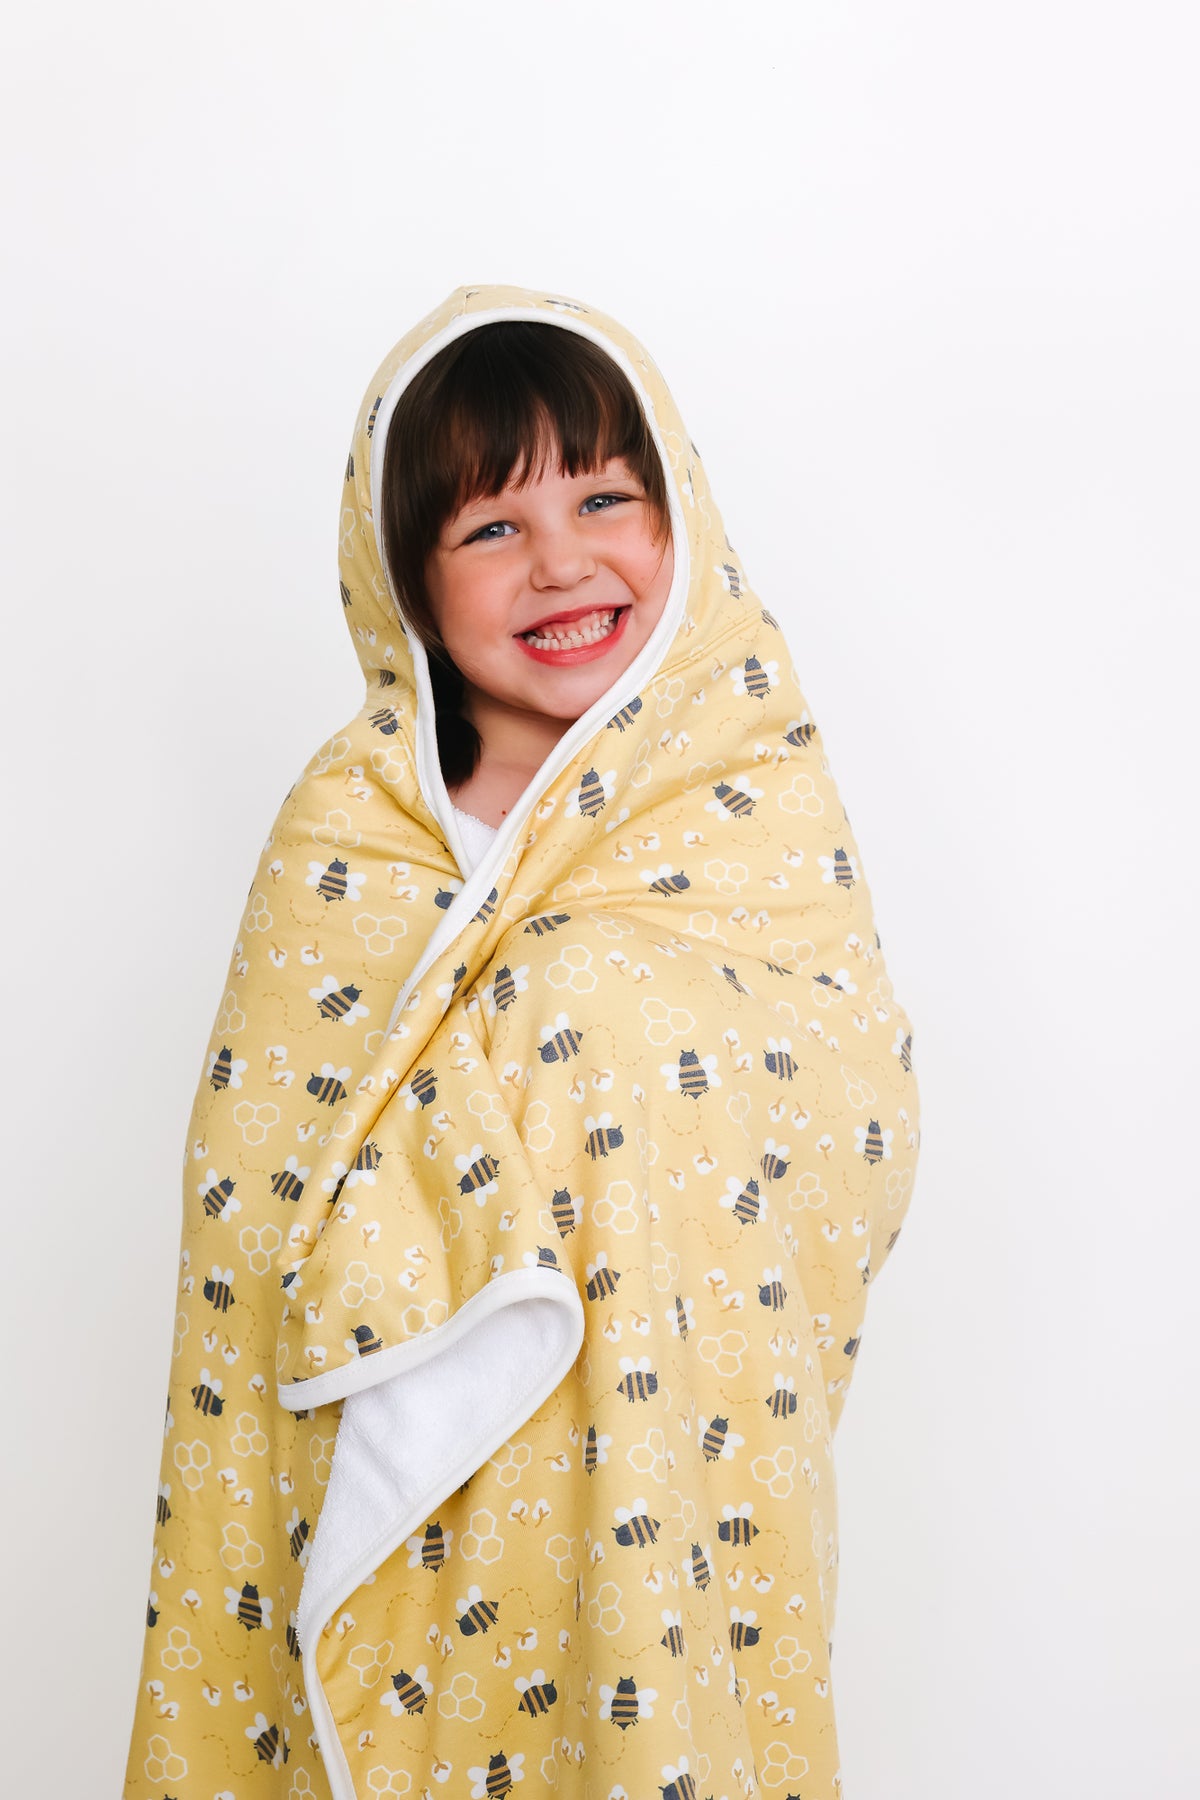 Premium Big Kid Hooded Towel - Honeycomb